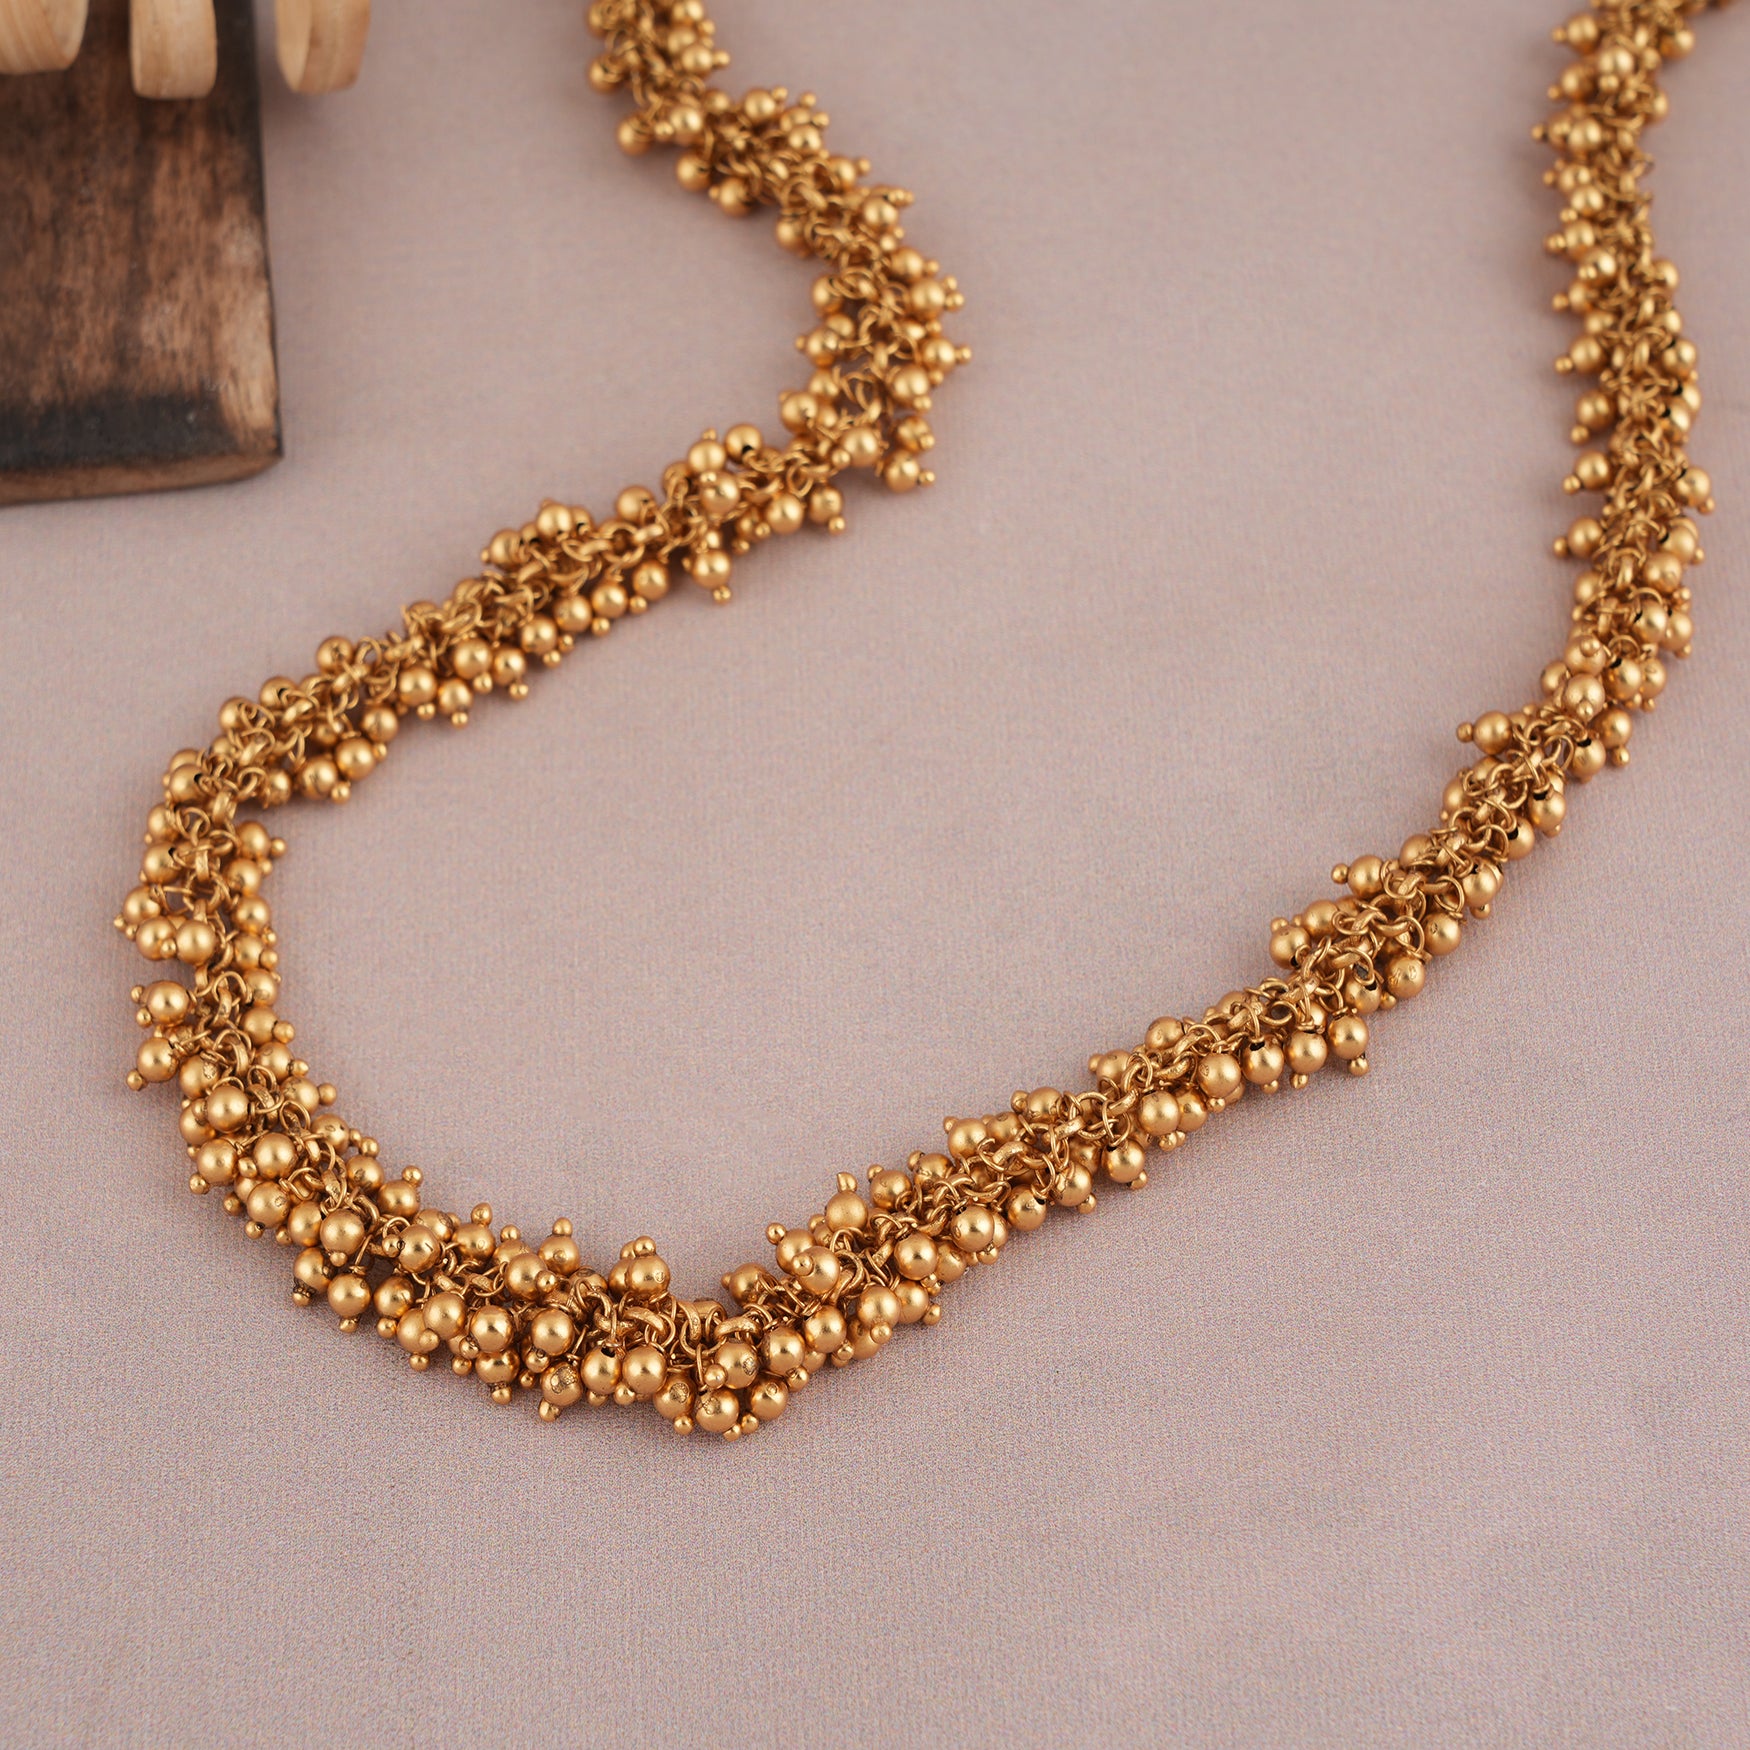 Beautiful antique gold plain ball chain for women